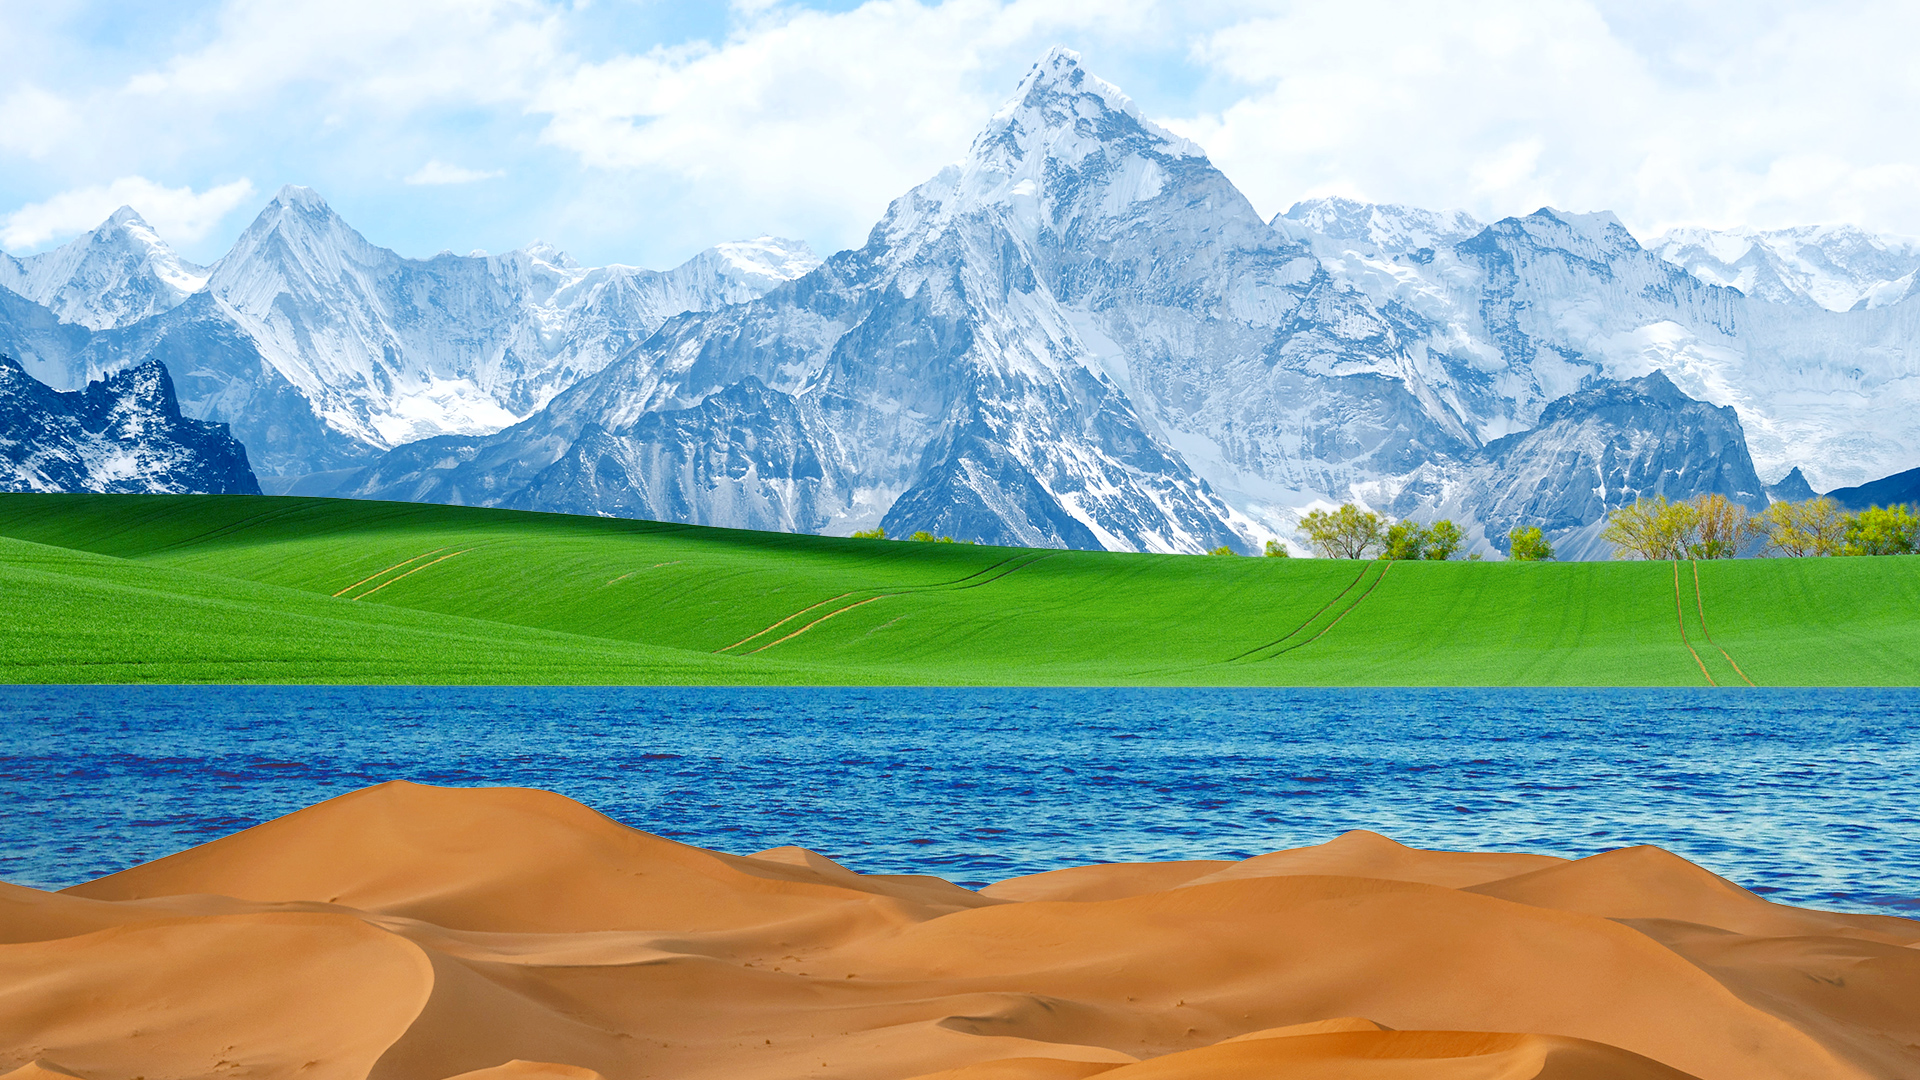 composite of mountains, grass, water, desert